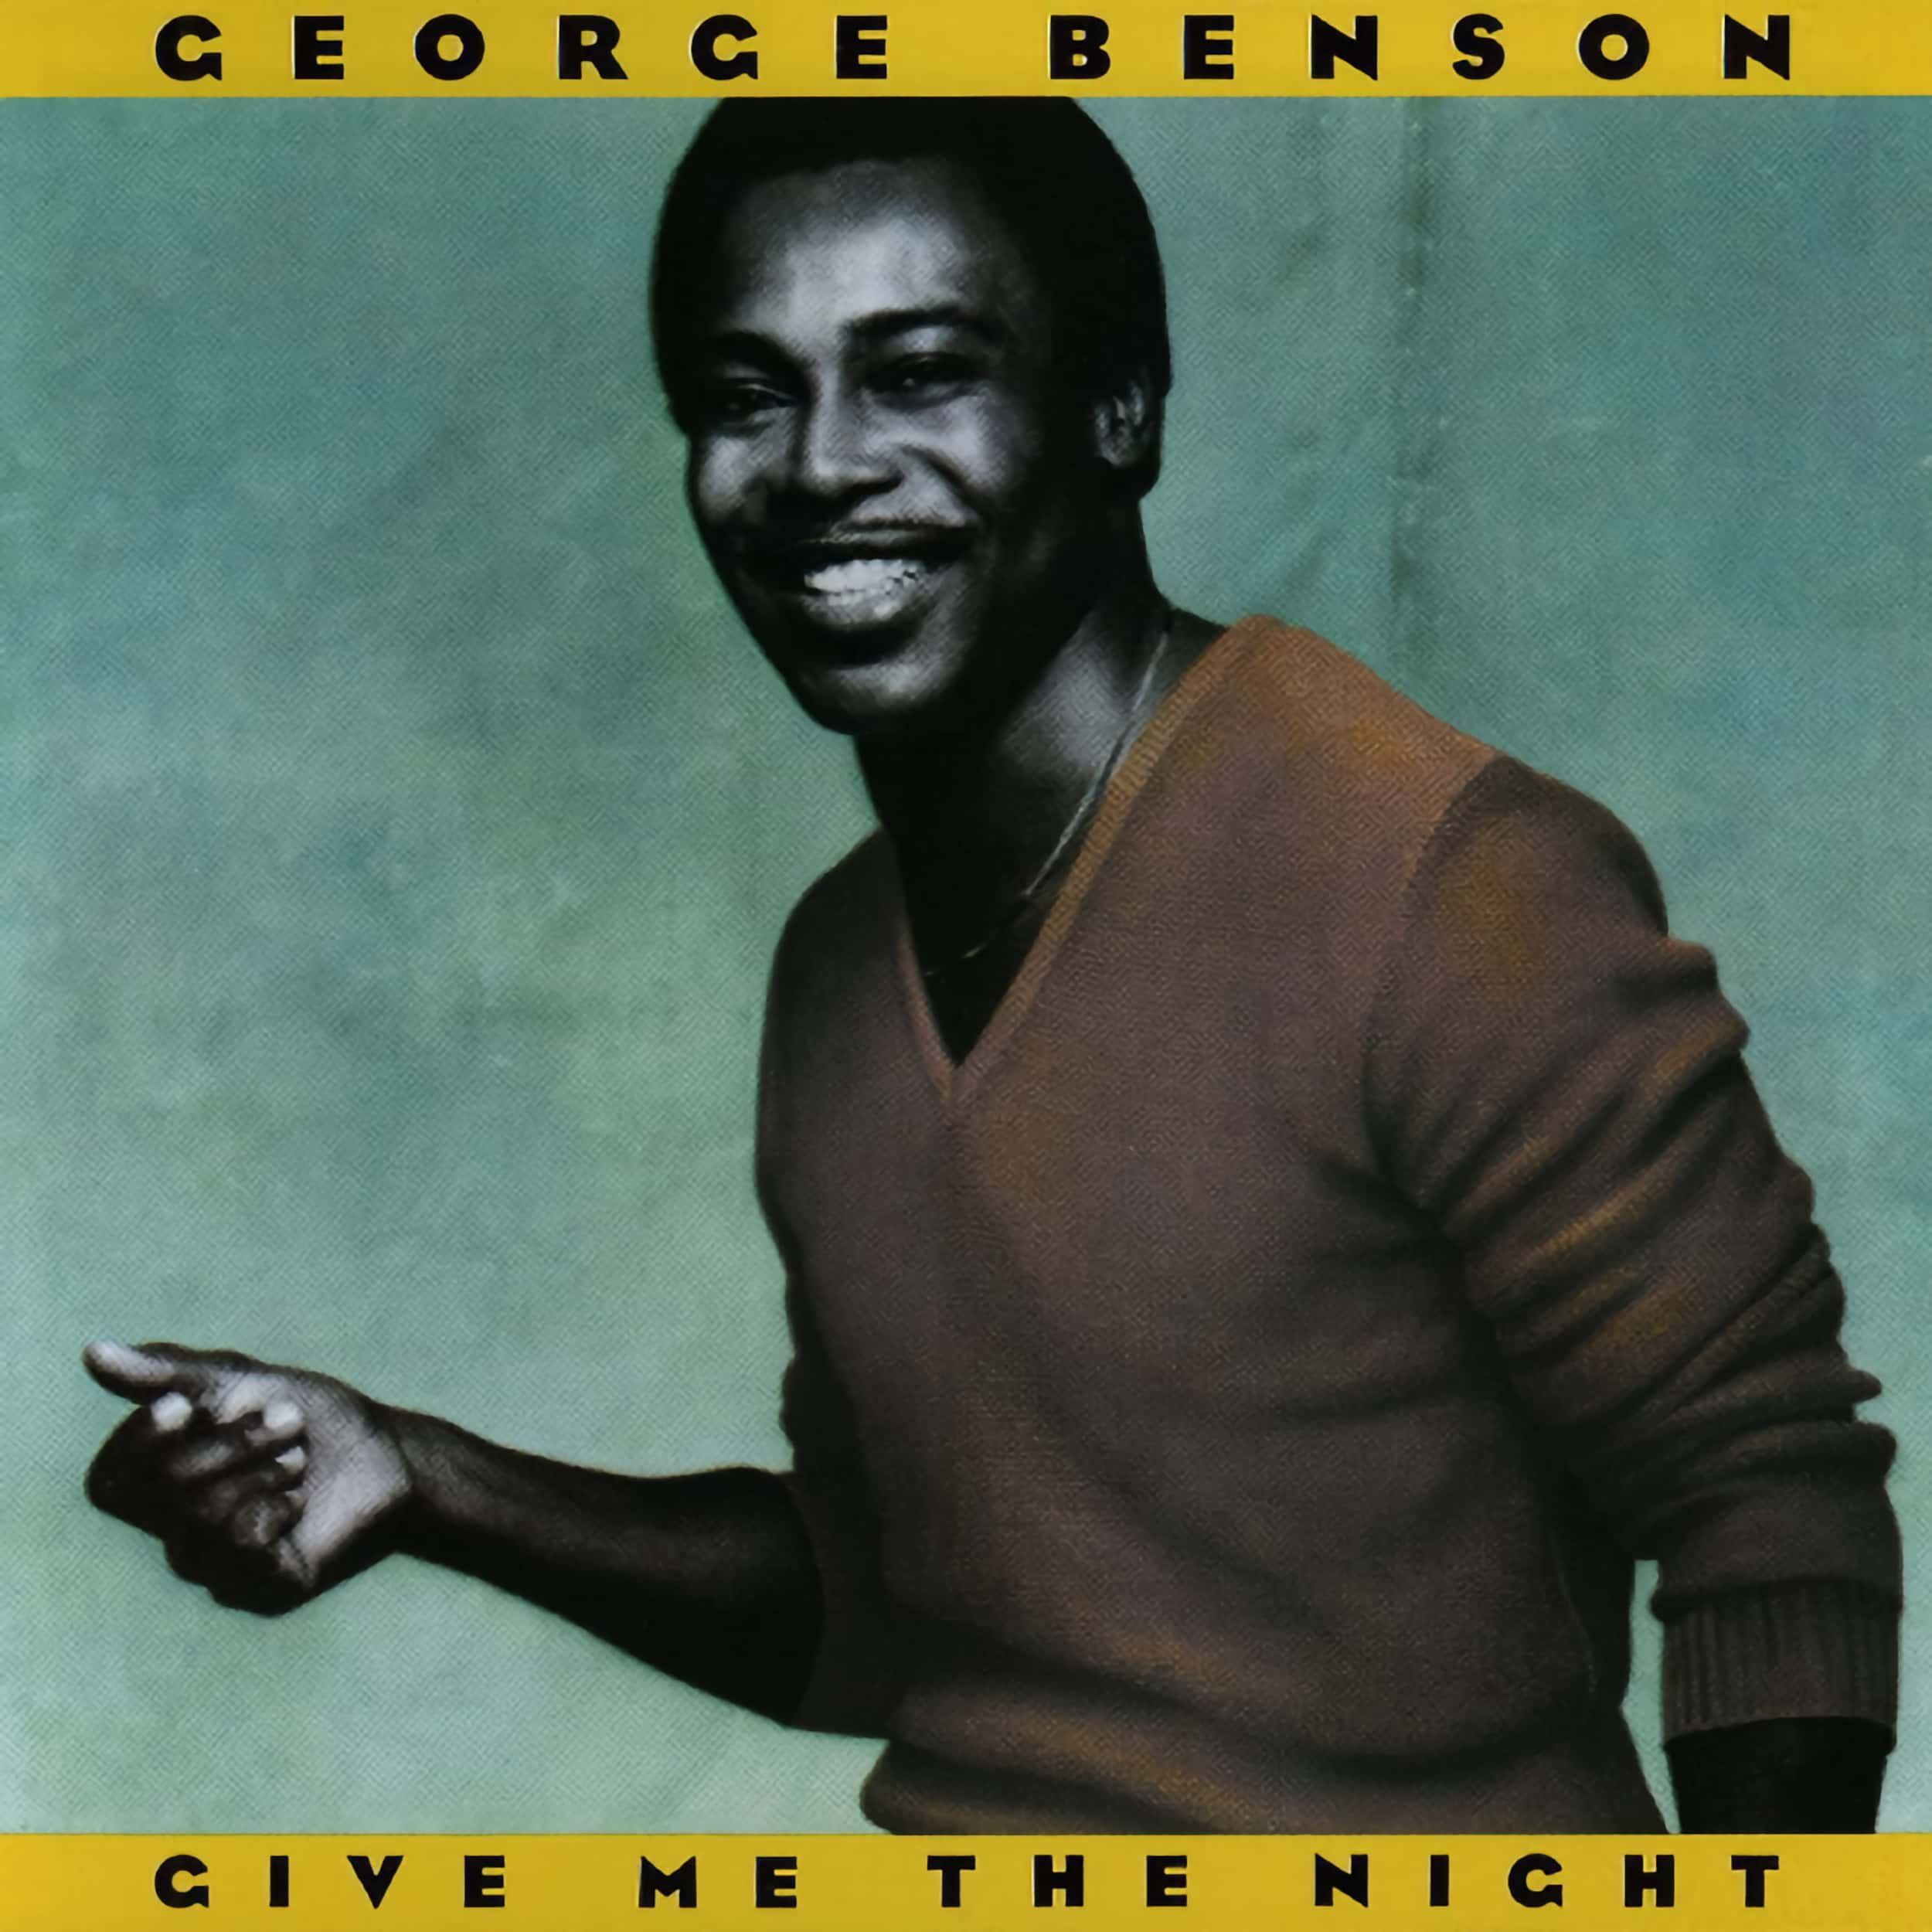 George Benson – Give Me The Night